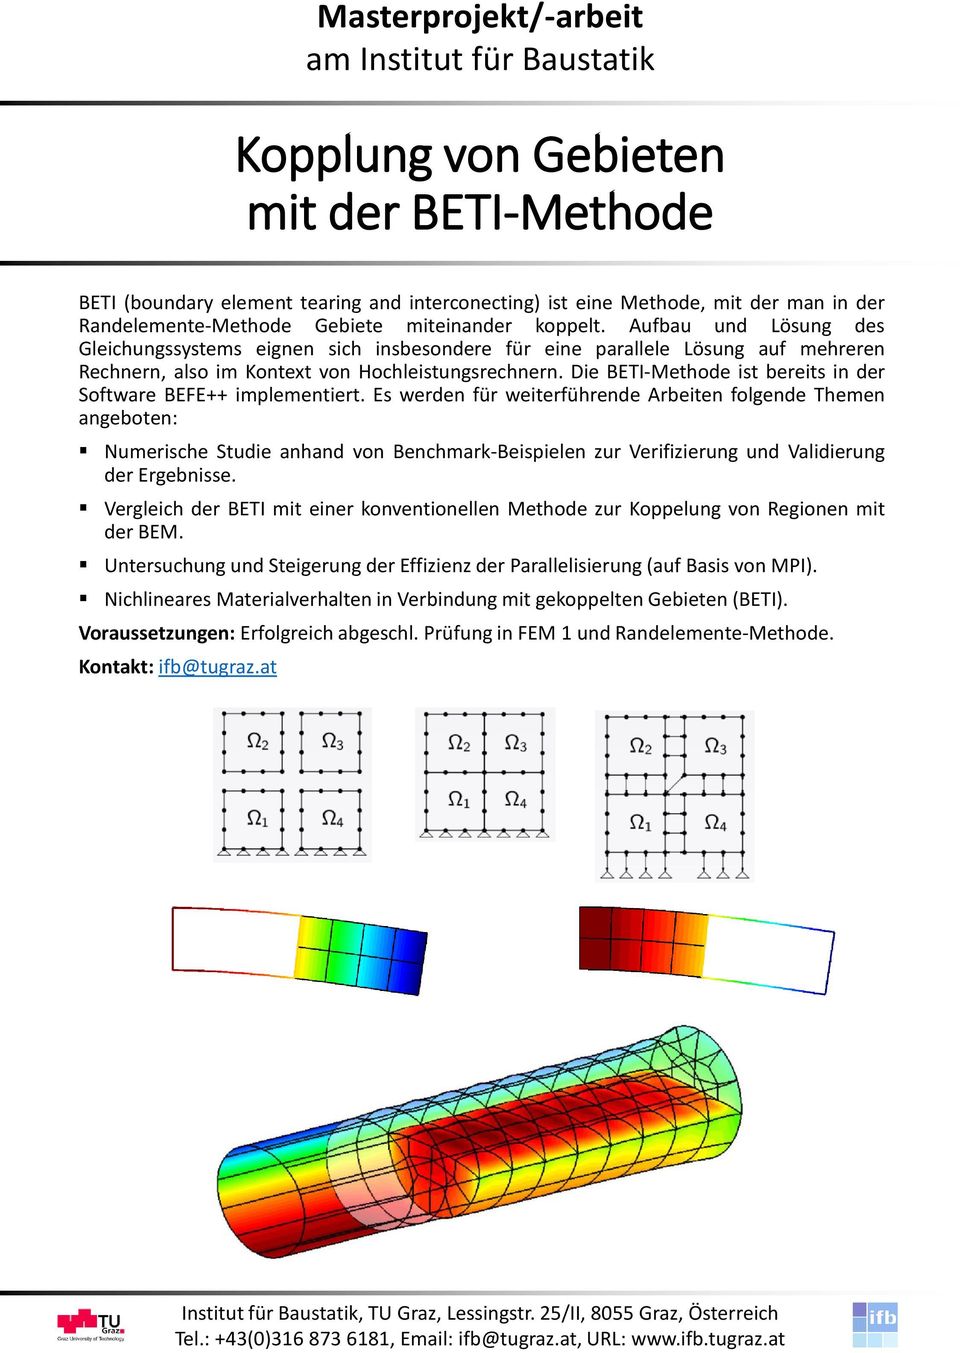 Die BETI-Methode ist bereits in der Software BEFE++ implementiert.